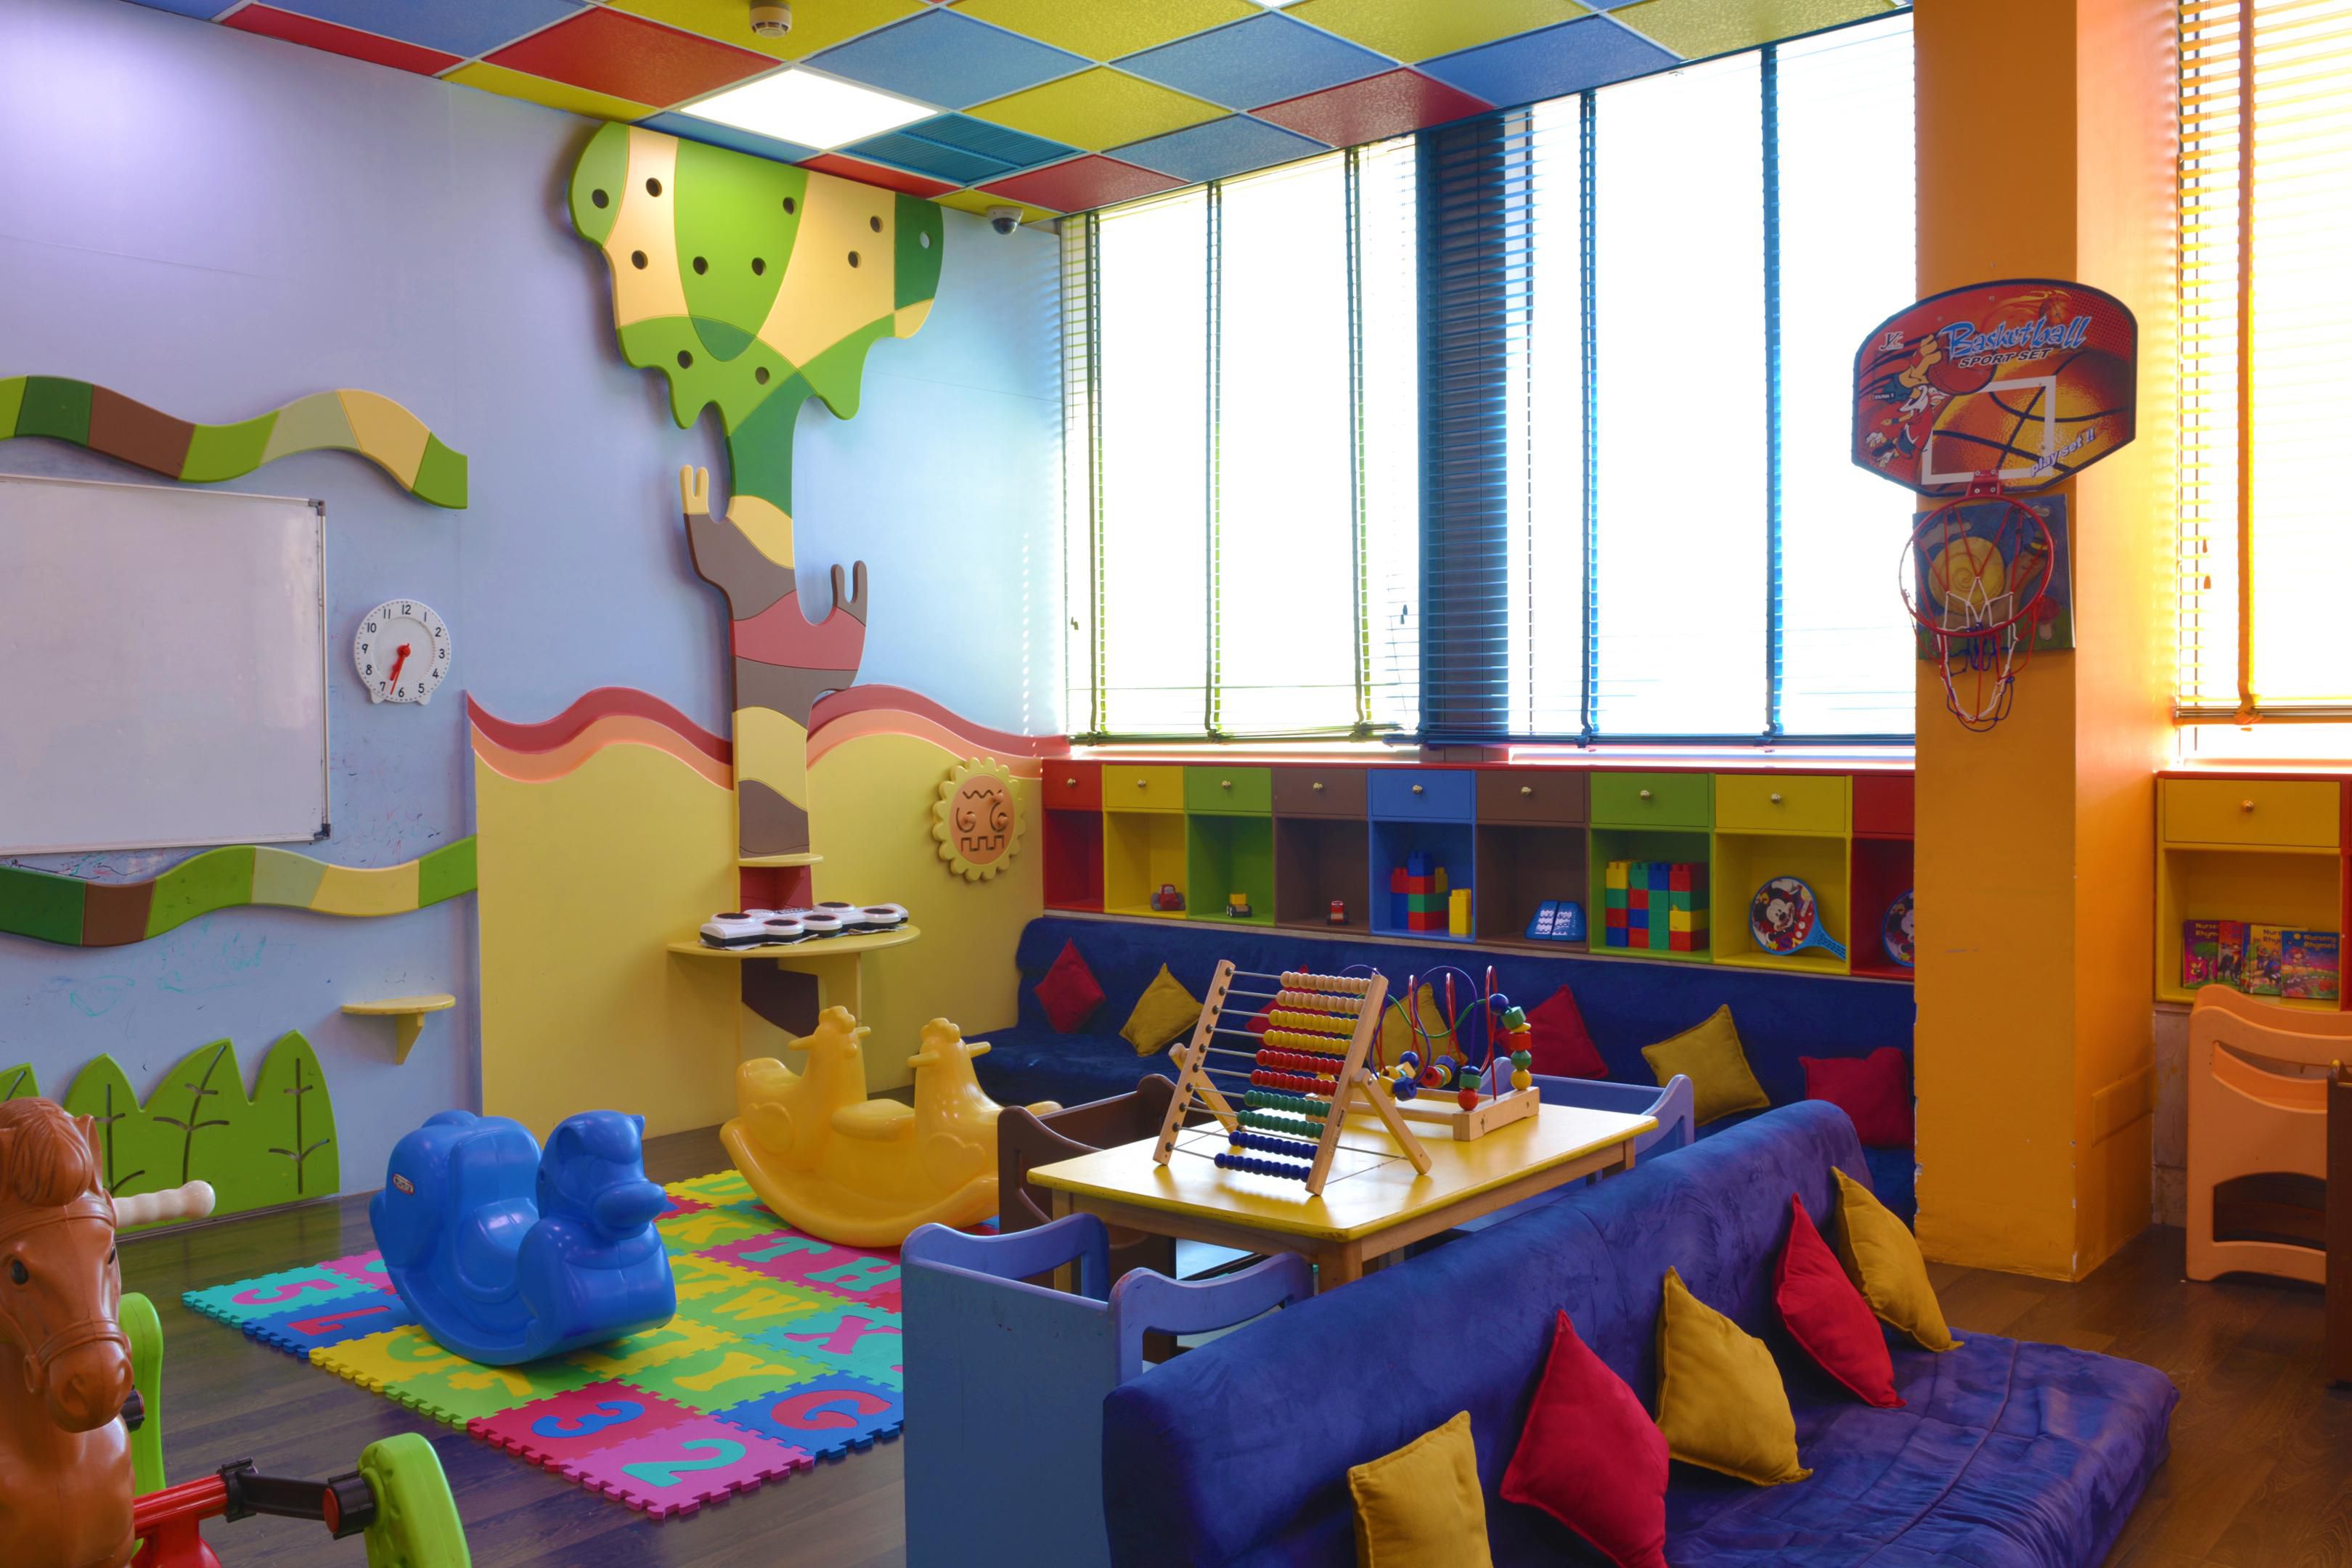 Kids Club located at the sister hotel, Holiday Inn Al Thuraya City